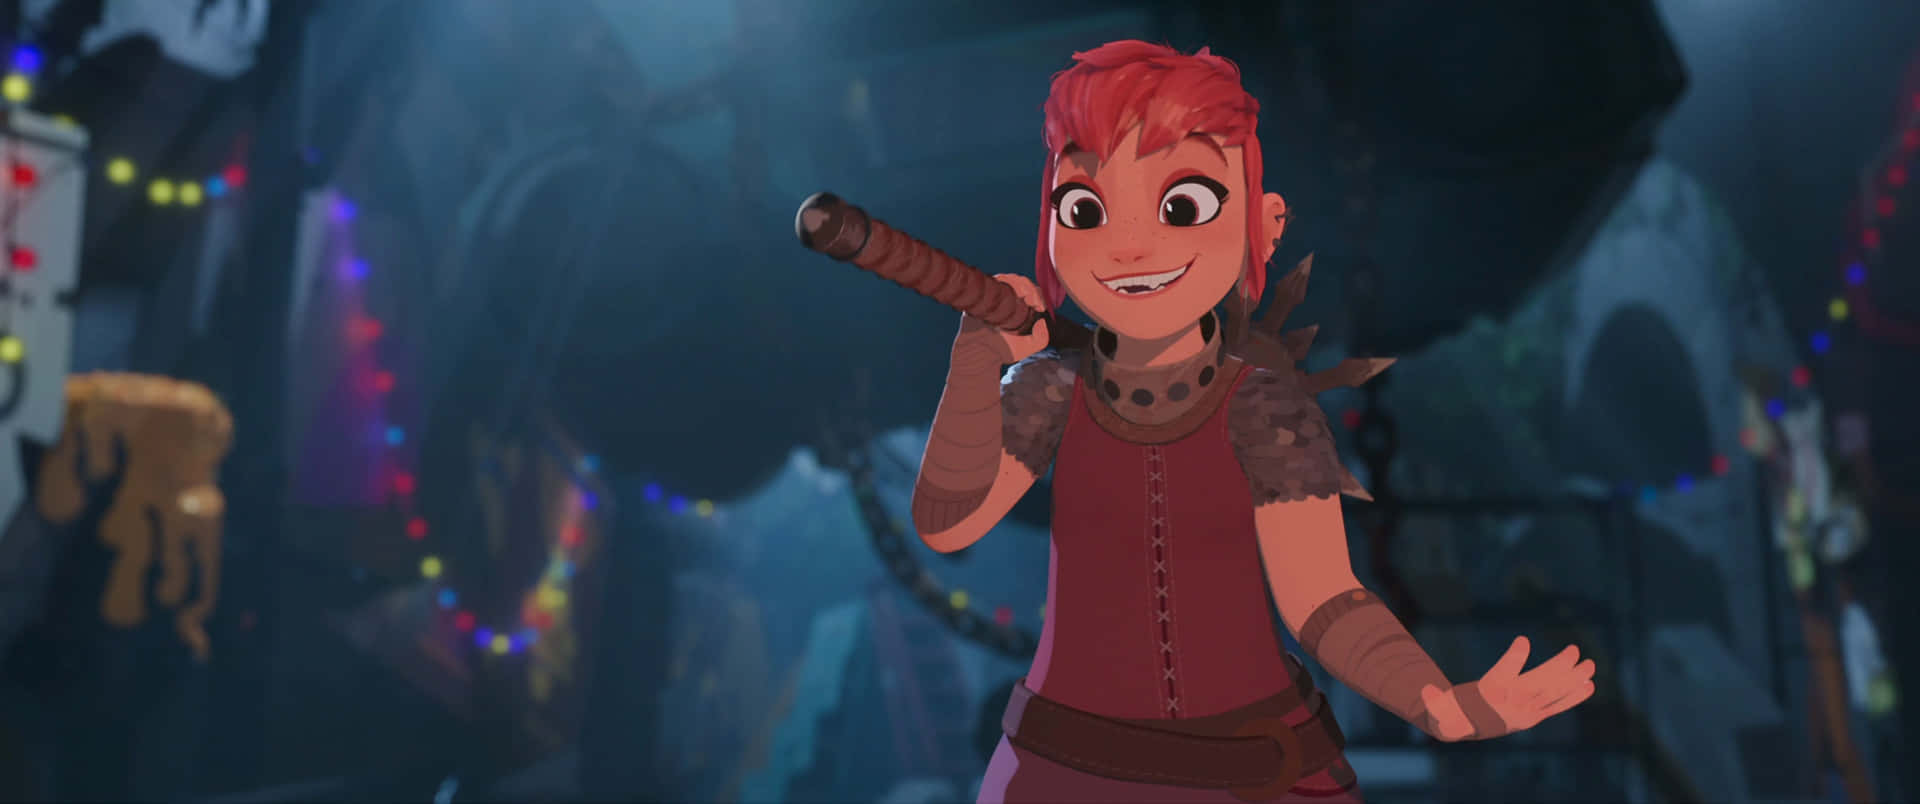 Animated Adventure Nimona Smiling With Sword Wallpaper